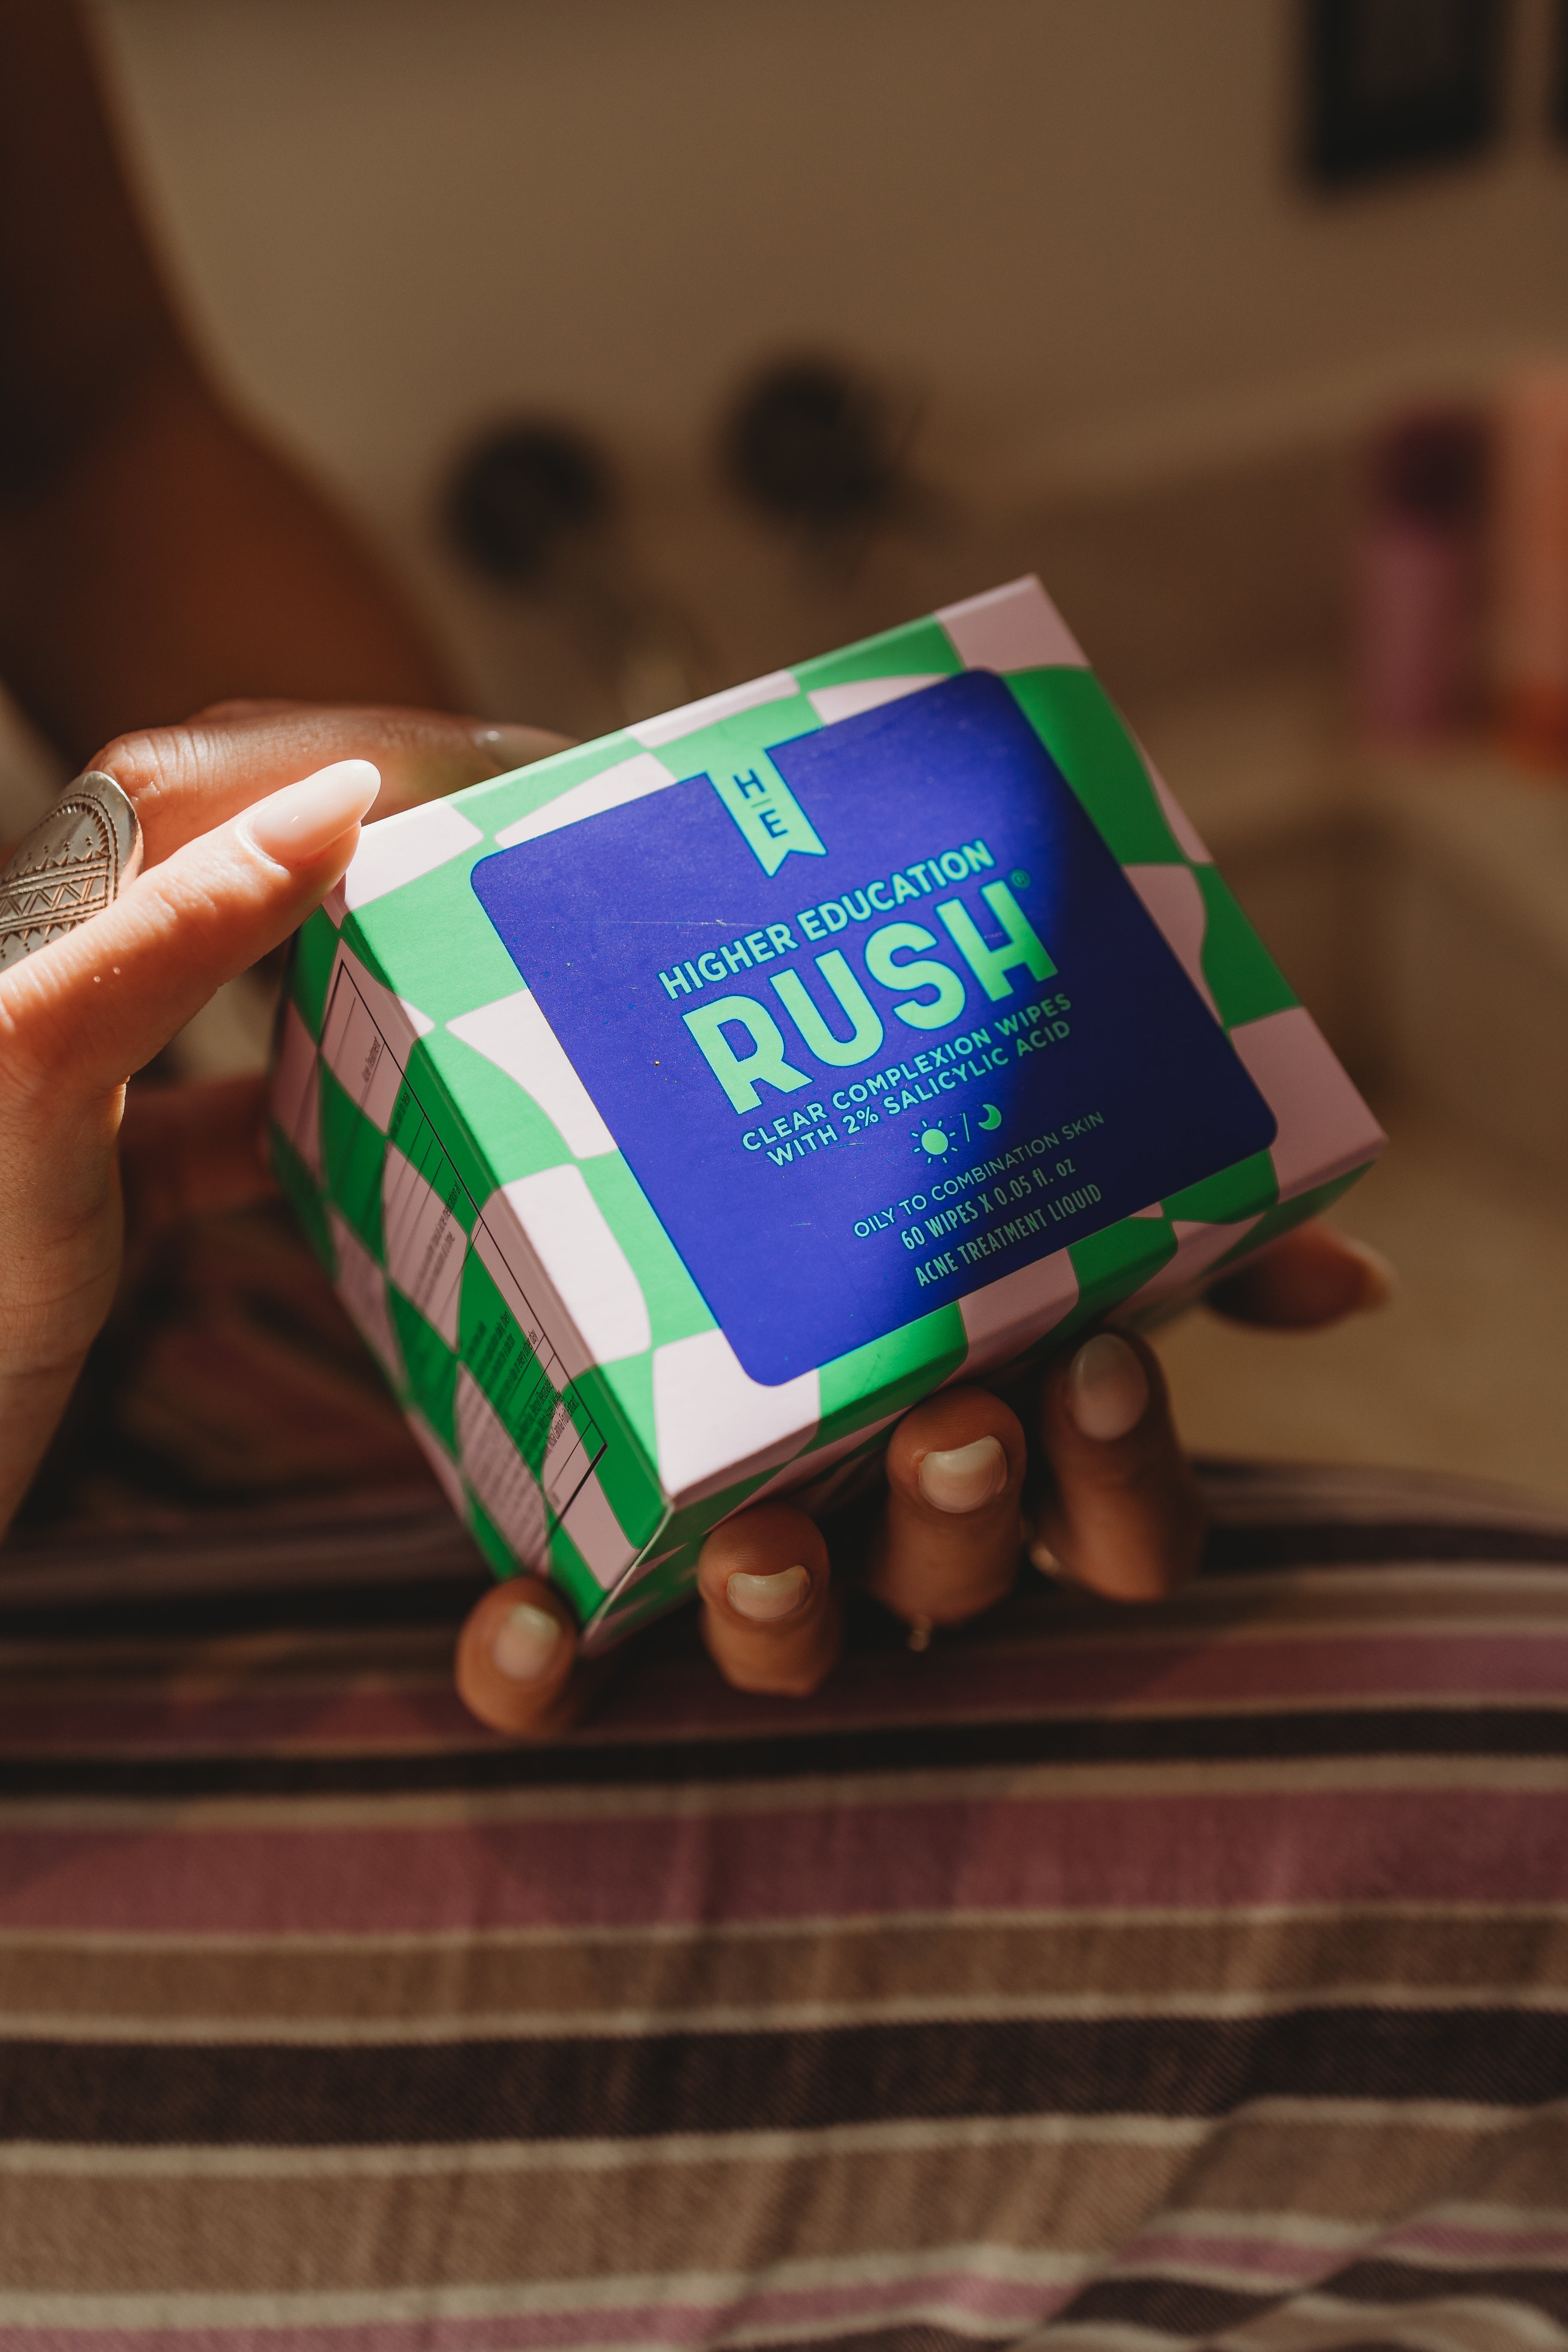 RUSH® Salicylic Acid Complexion Pads